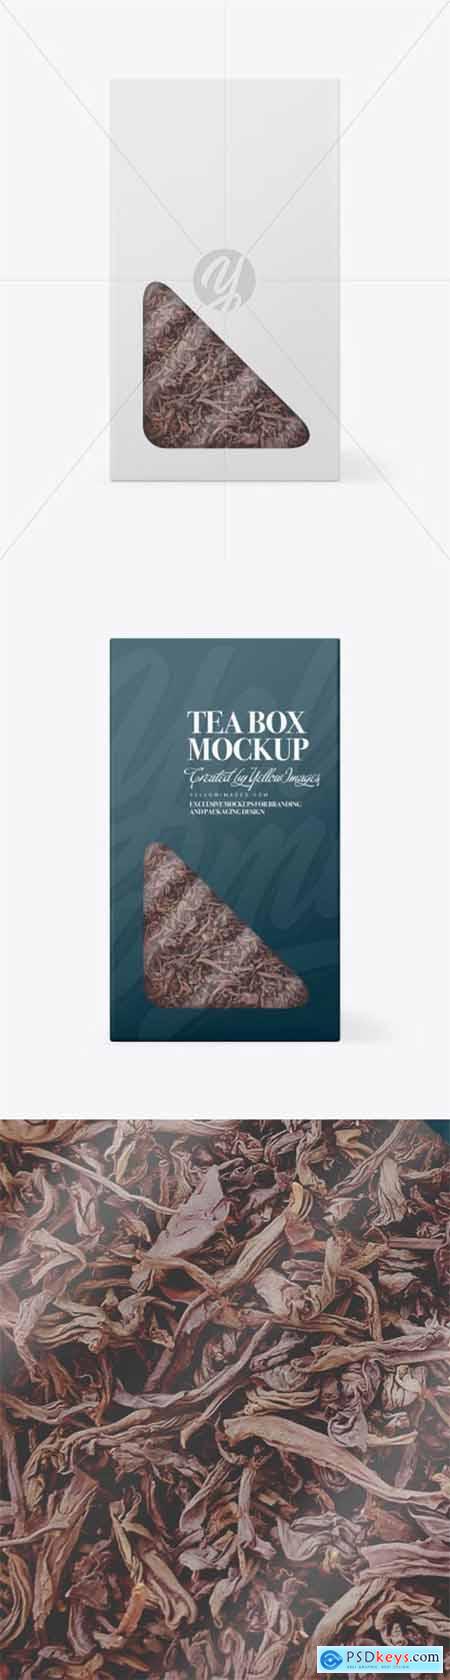 Box with Black Tea Mockup 80476